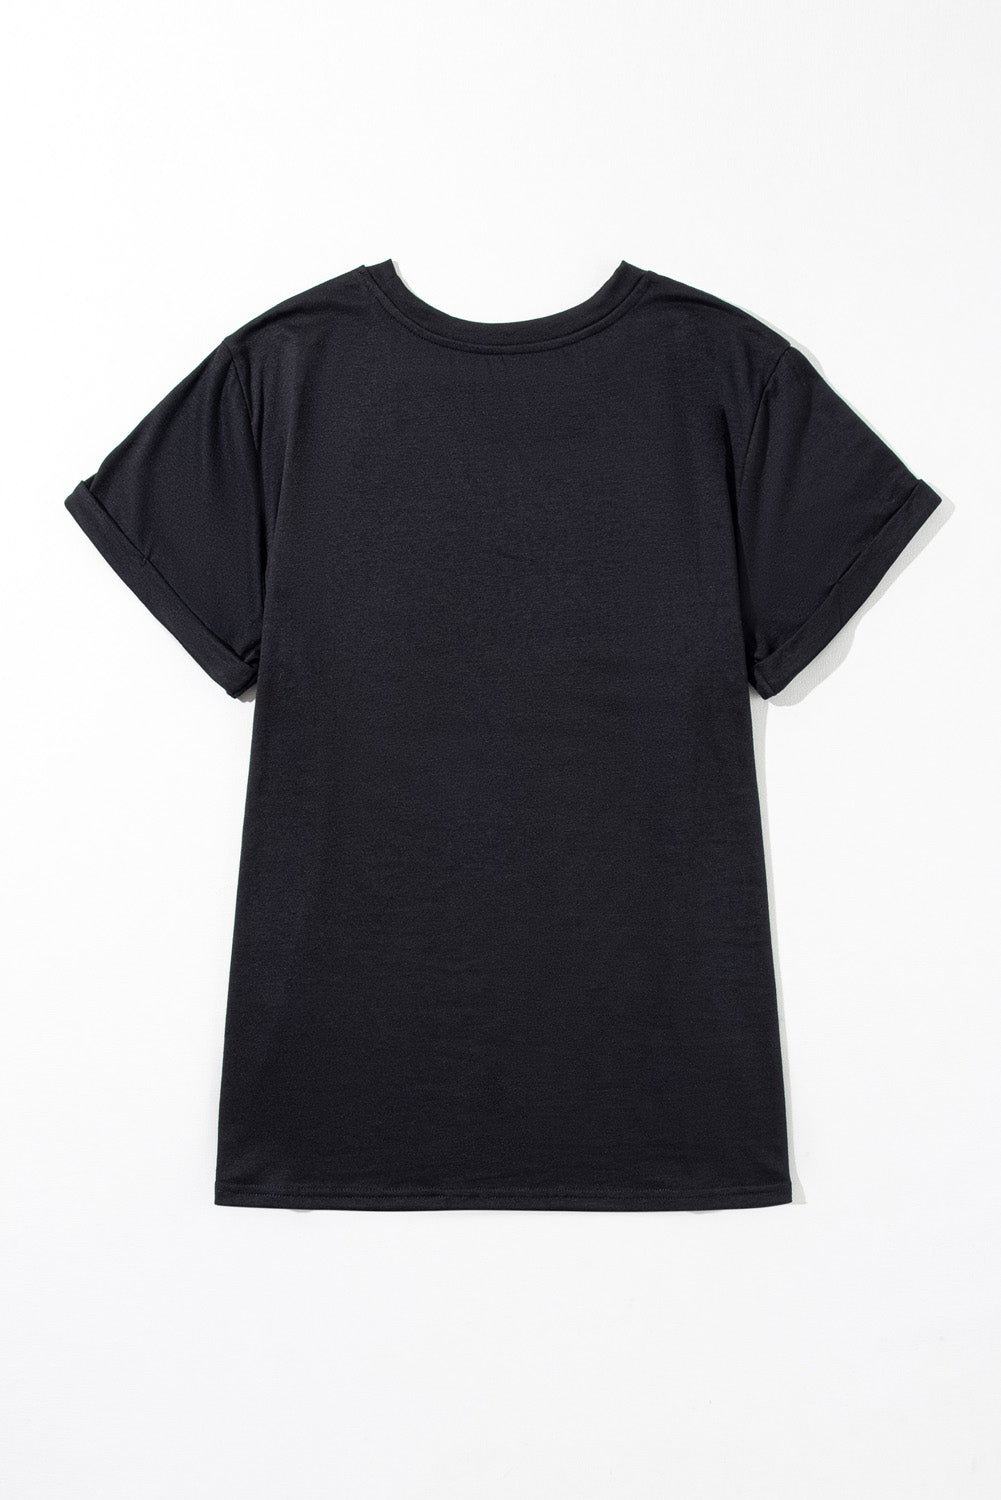 Black Round Neck Rolled Sleeve Plus Size T-shirt